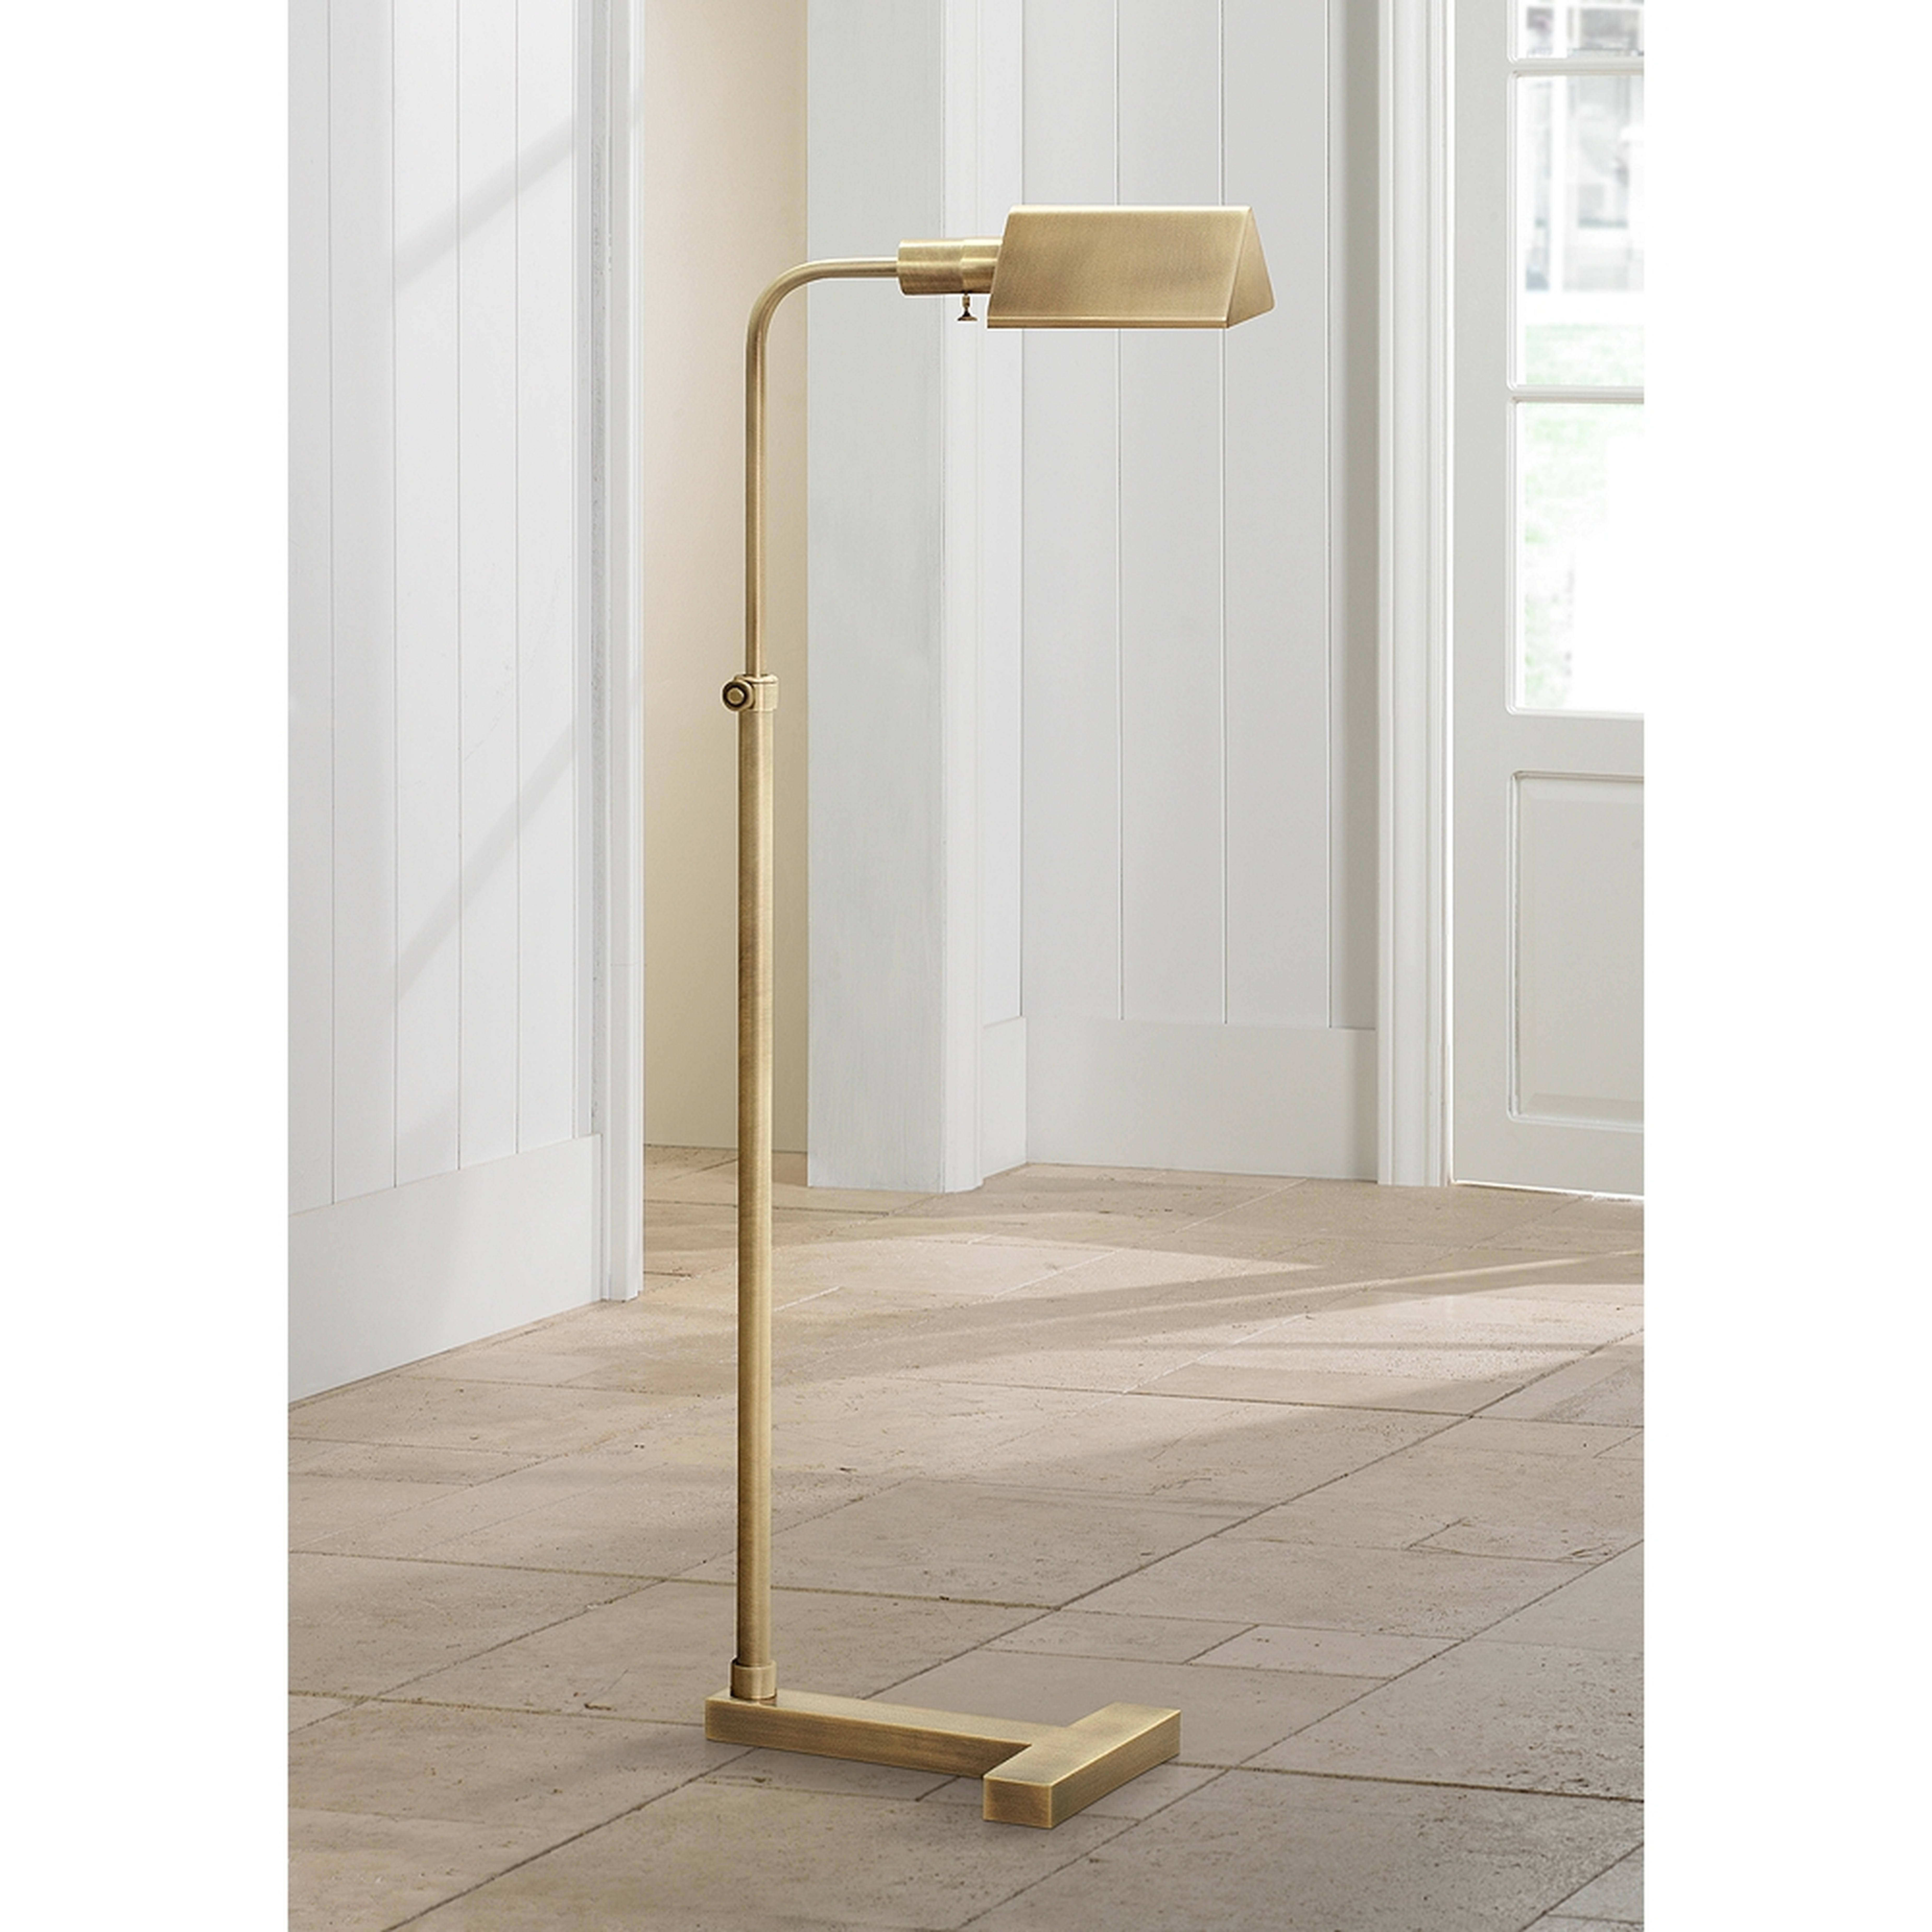 Fairfax Adjustable Antique Brass Pharmacy Floor Lamp - Style # 1D677 - Lamps Plus